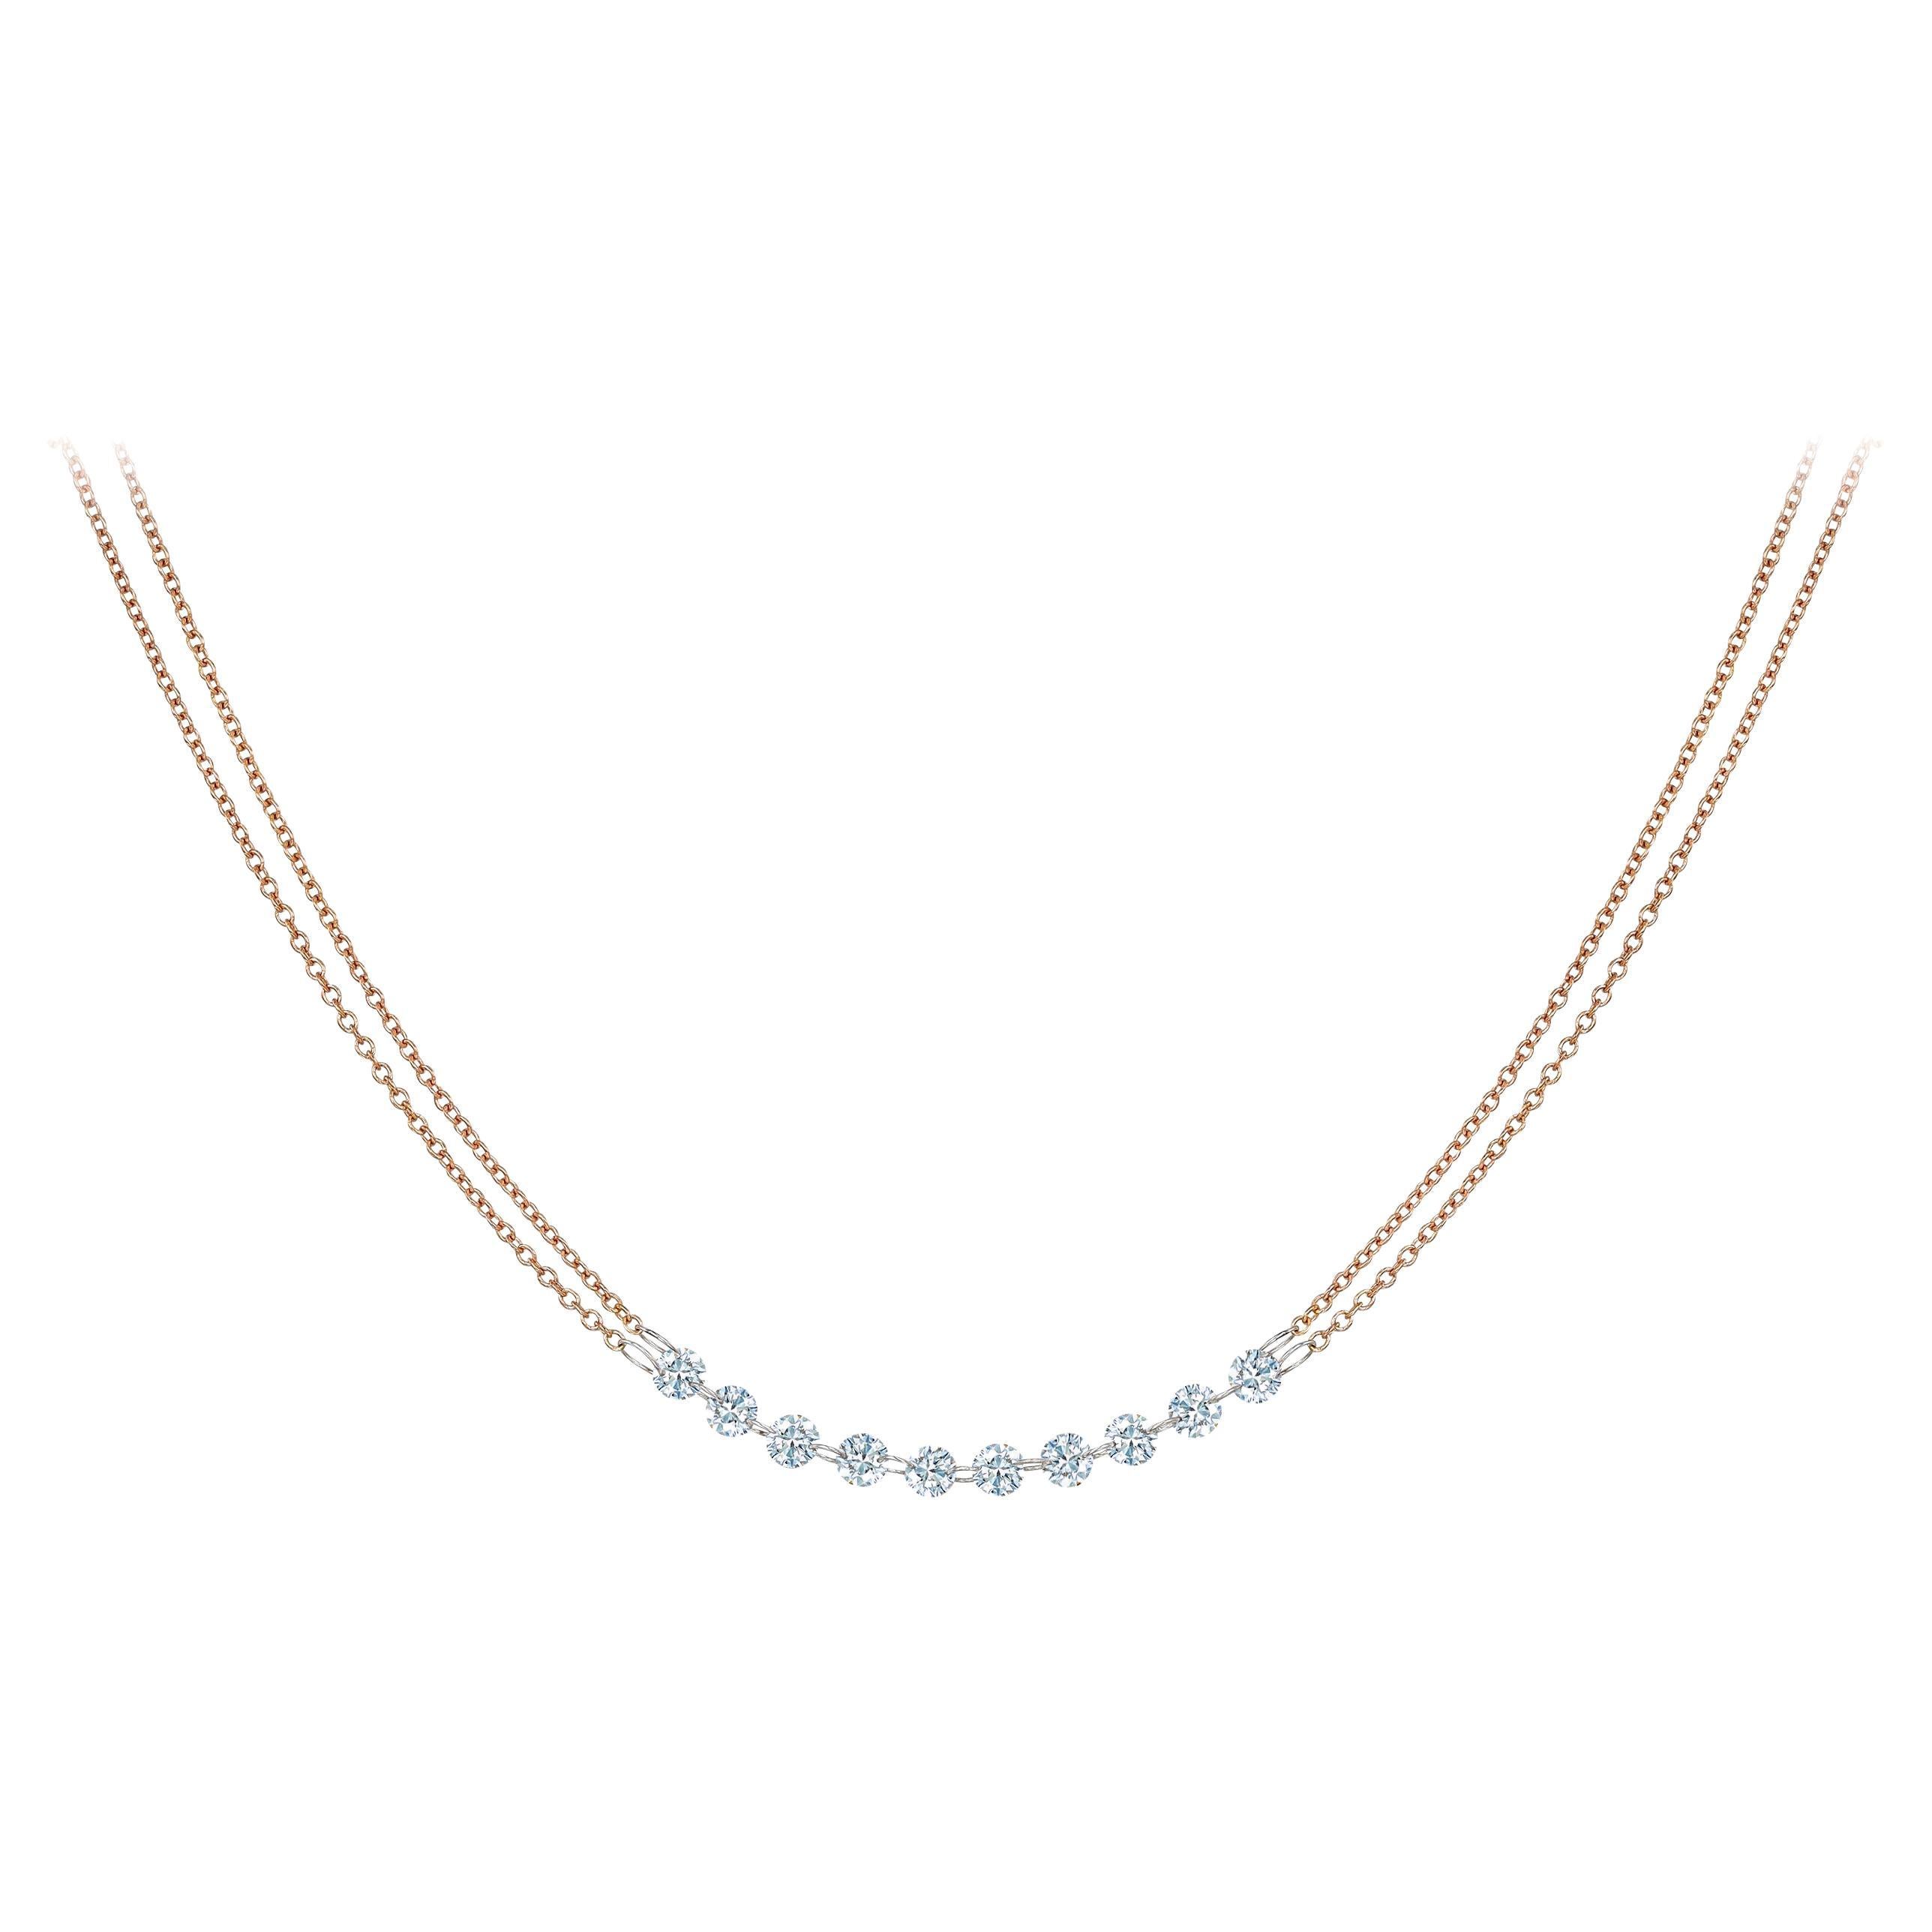 1.00Carat Diamond Necklace Chain Choker For Sale